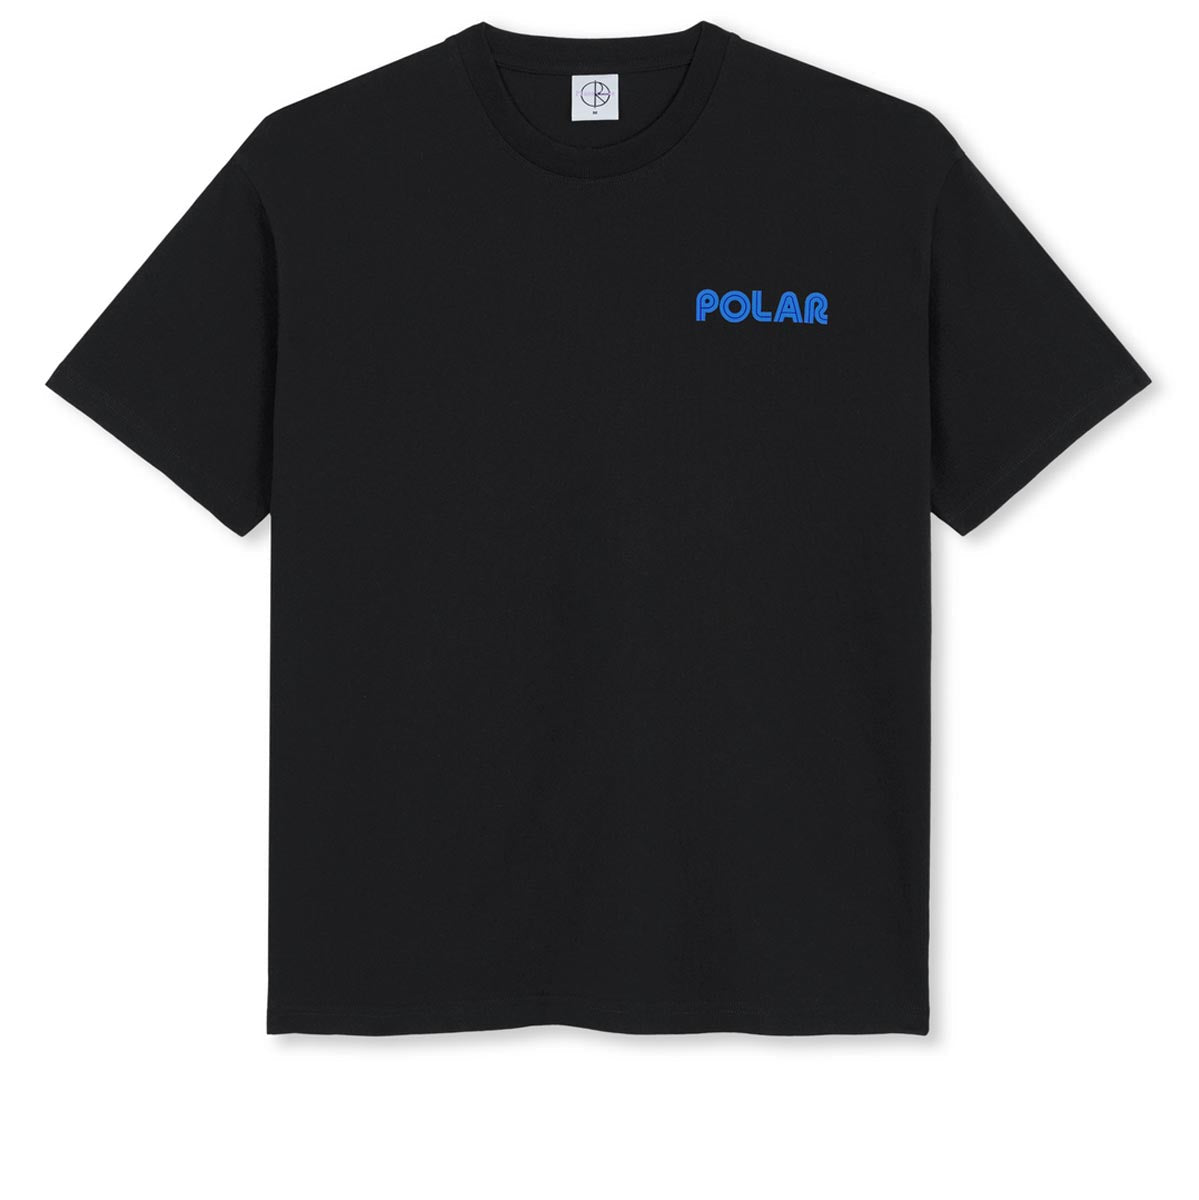 Polar Magnet T-Shirt - Black image 2